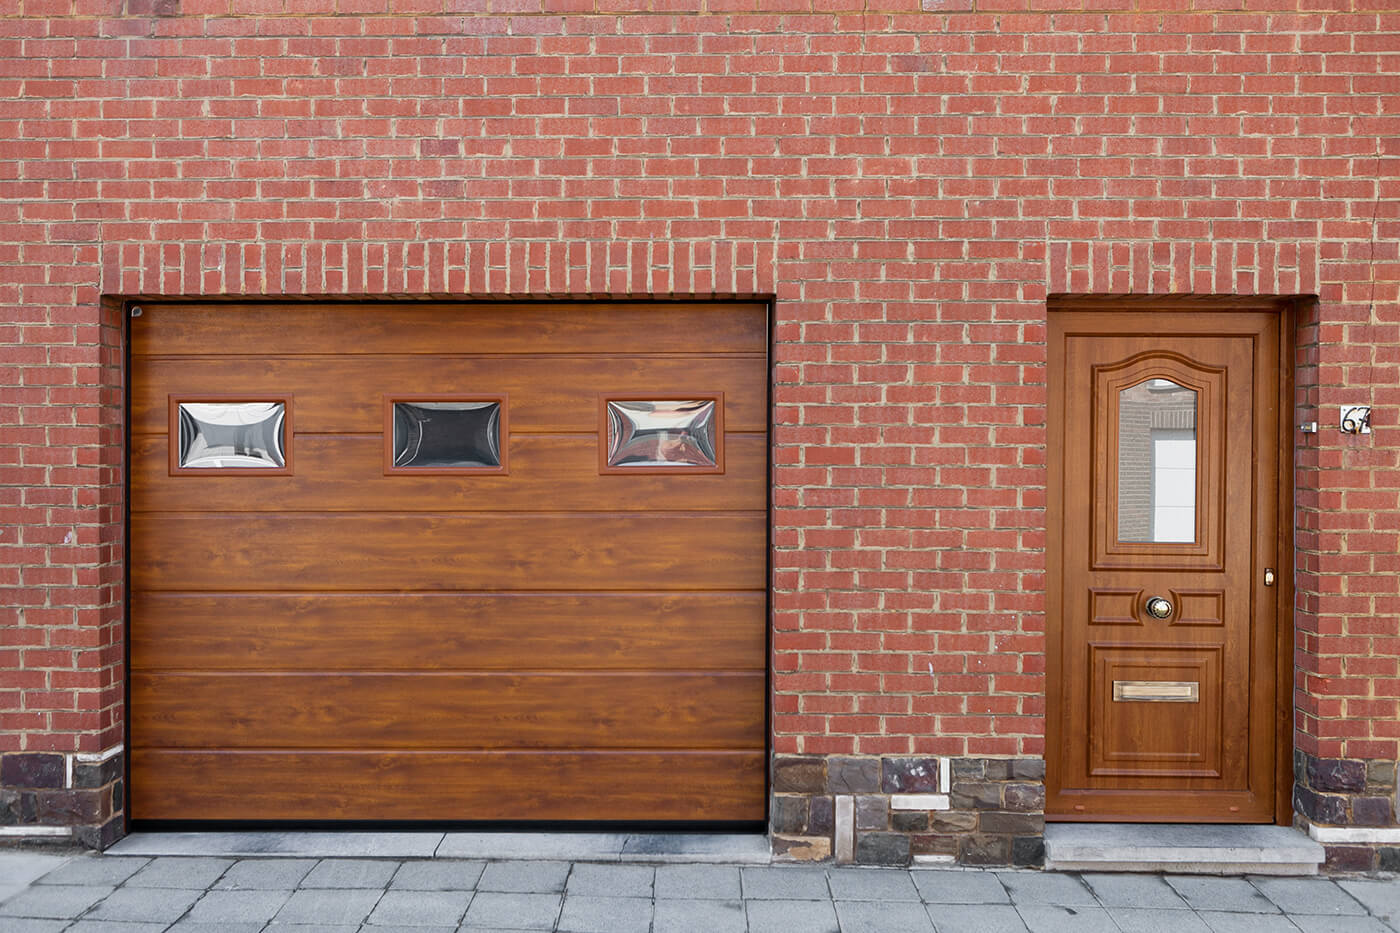 Made-to-measure sectional garage door - Raposo Charleroi, Image n°2